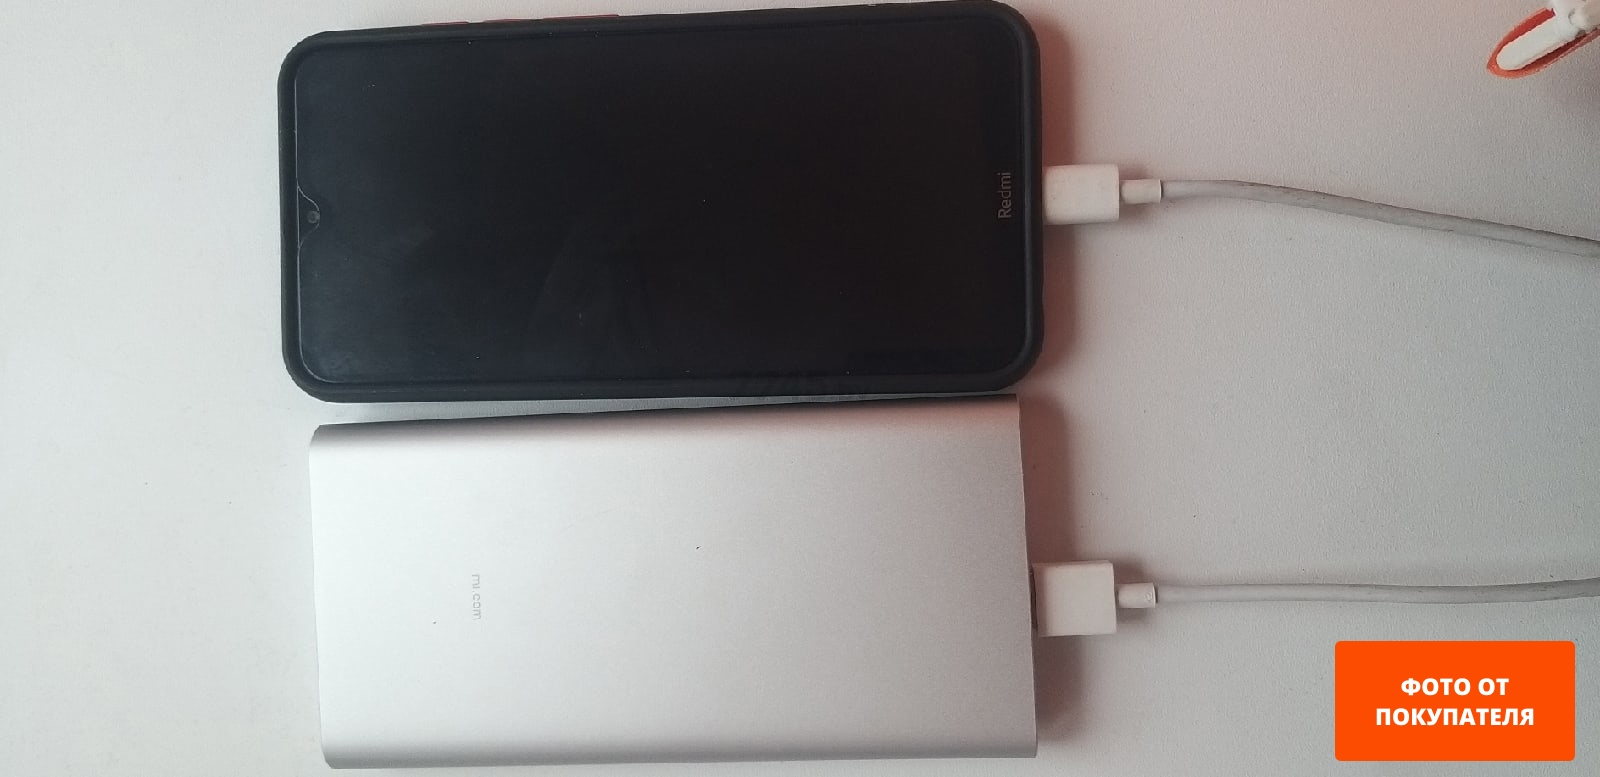 Power Bank Xiaomi Mi 3 10000mAh черный (VXN4274GL) - Фото 2